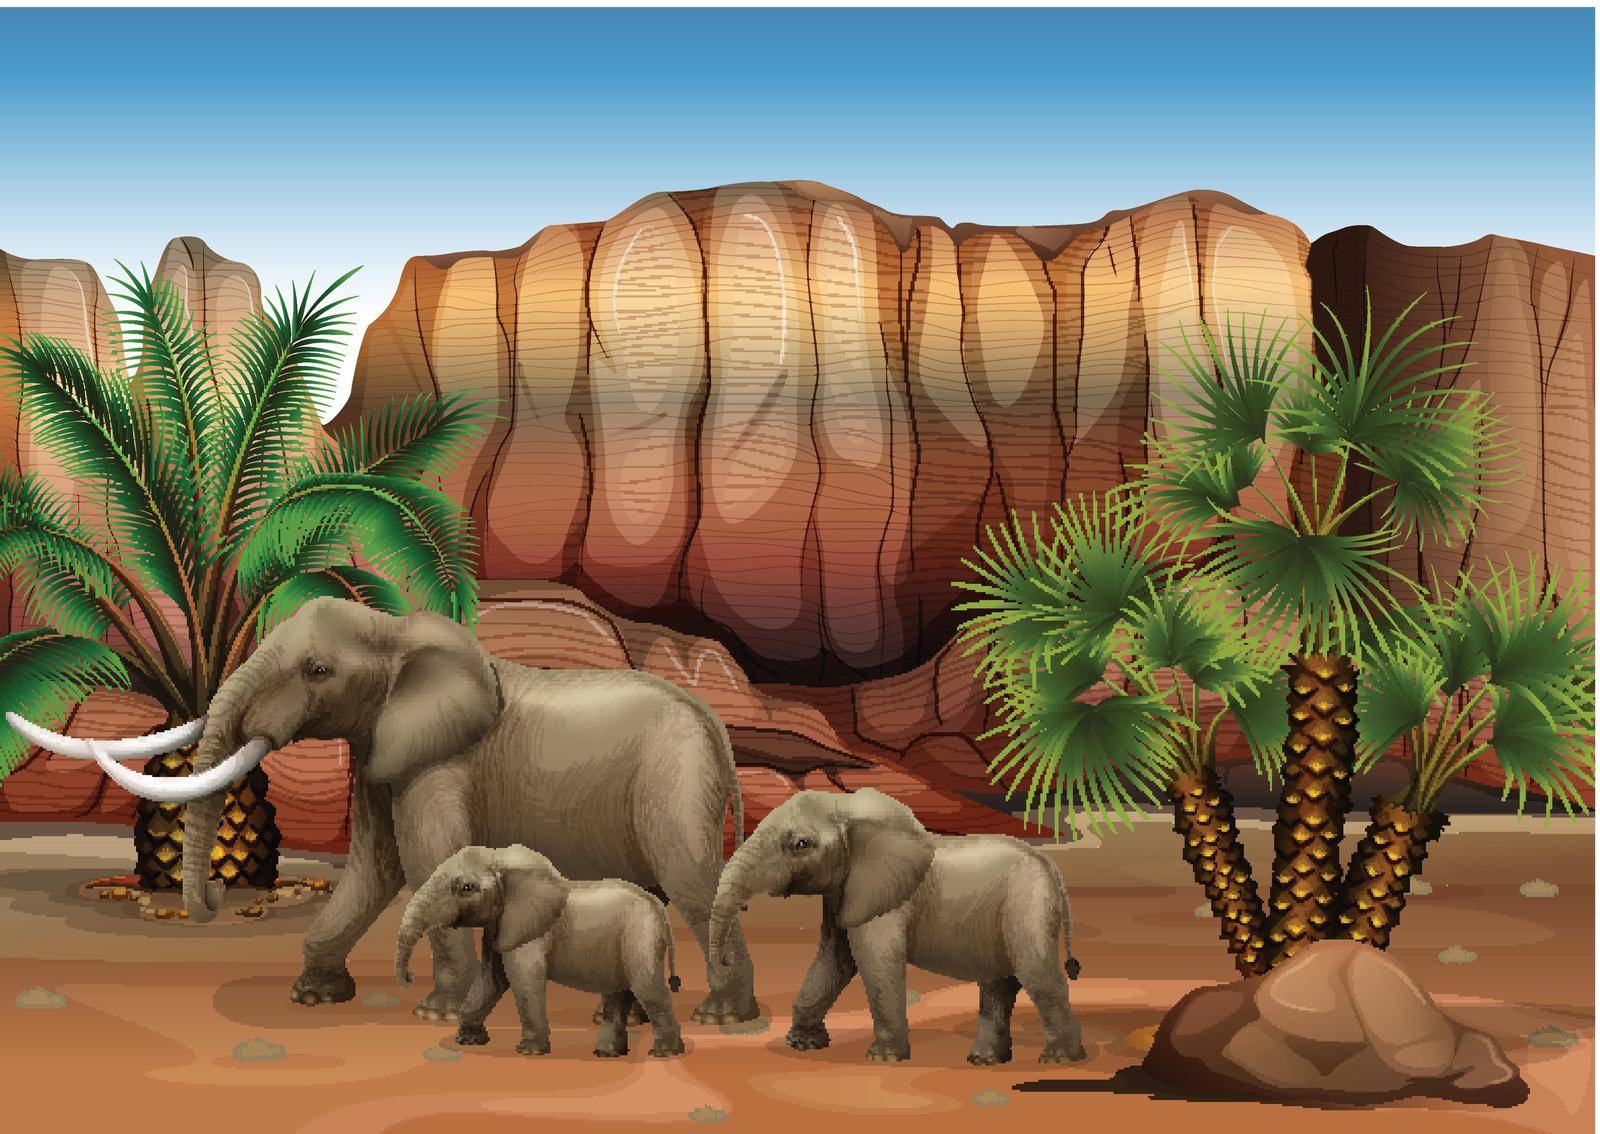 Illustration of the elephants at the desert